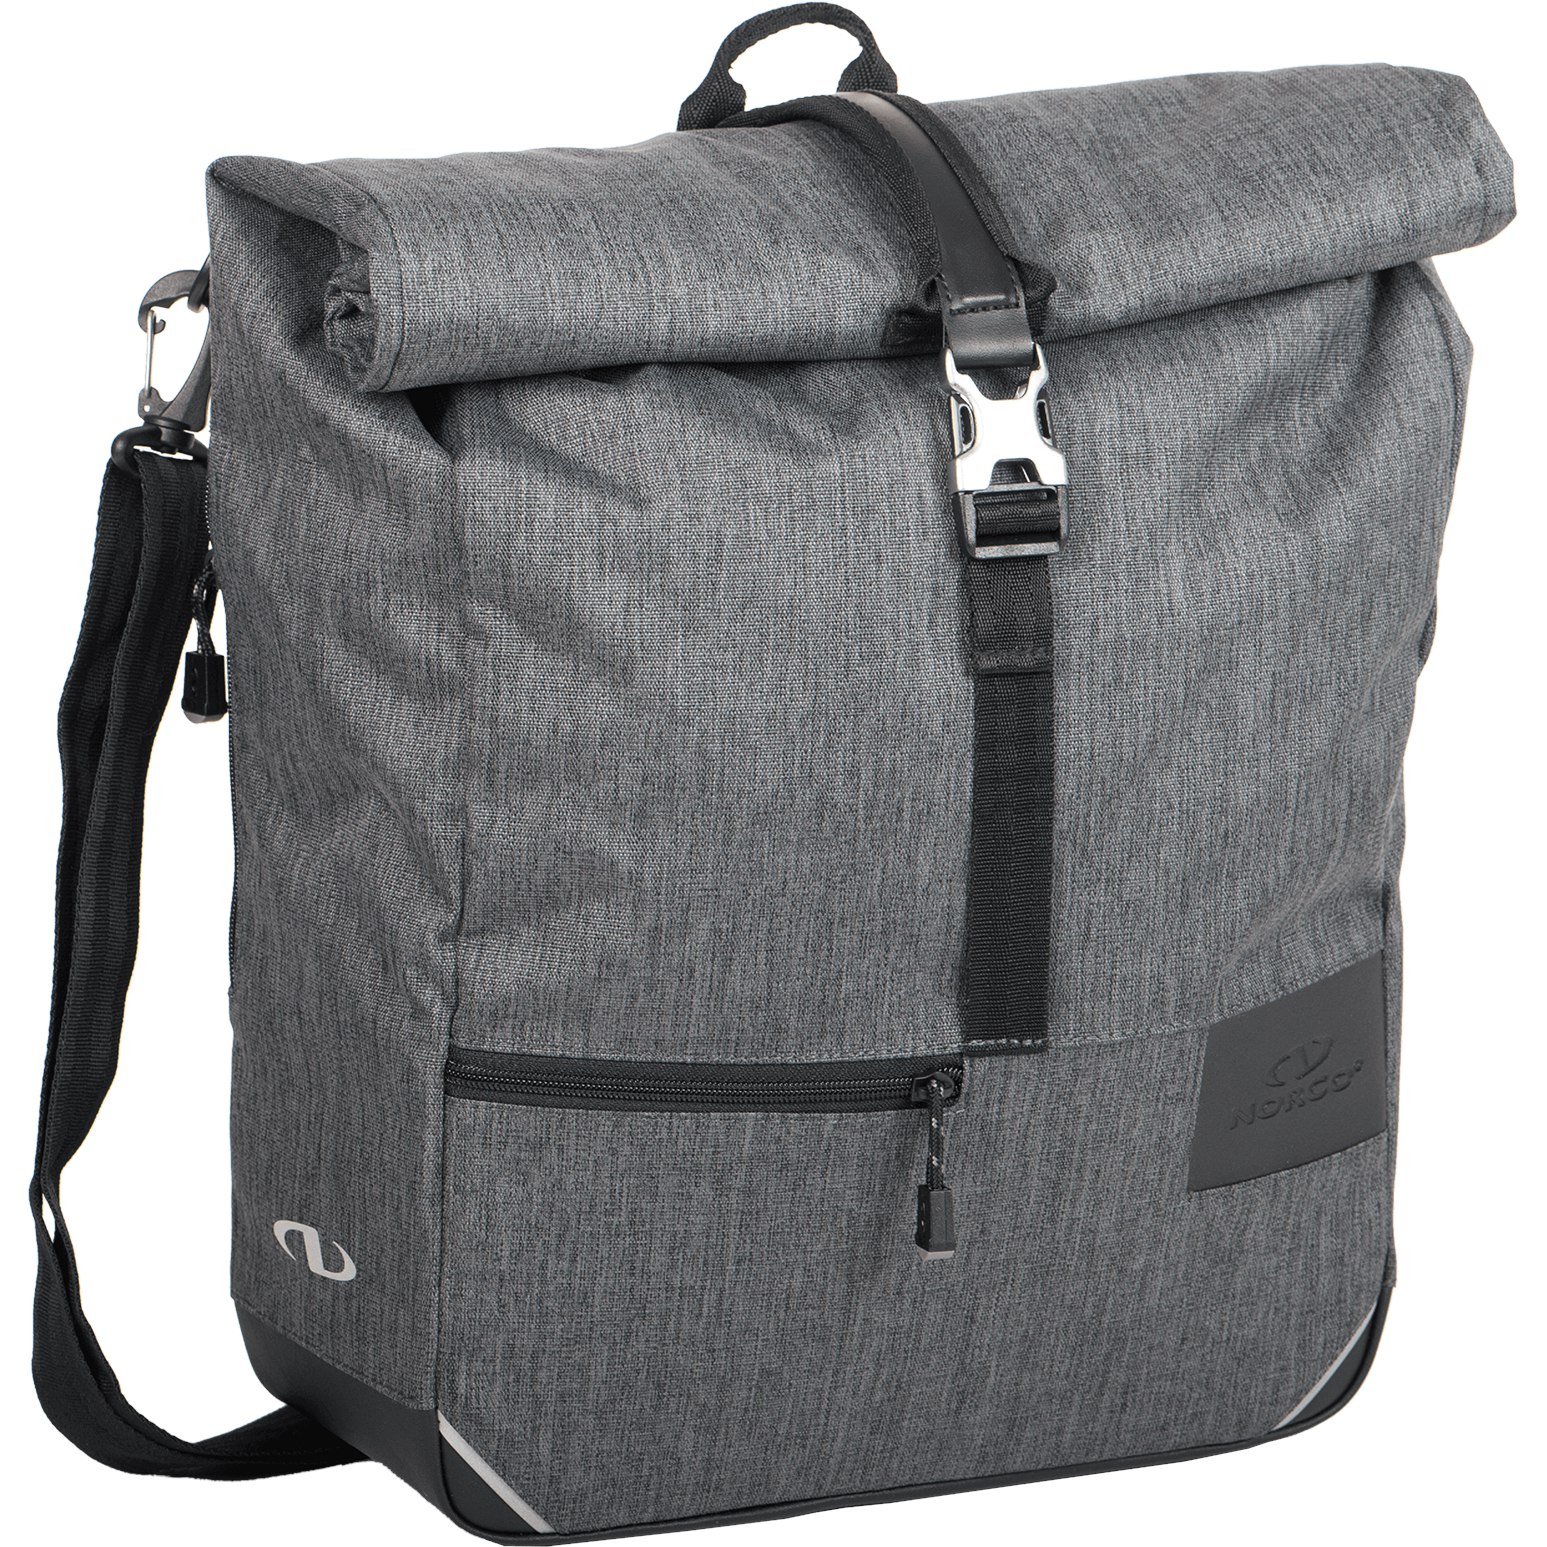 Productfoto van Norco Fintry City Bag 0224UB - tweed grey